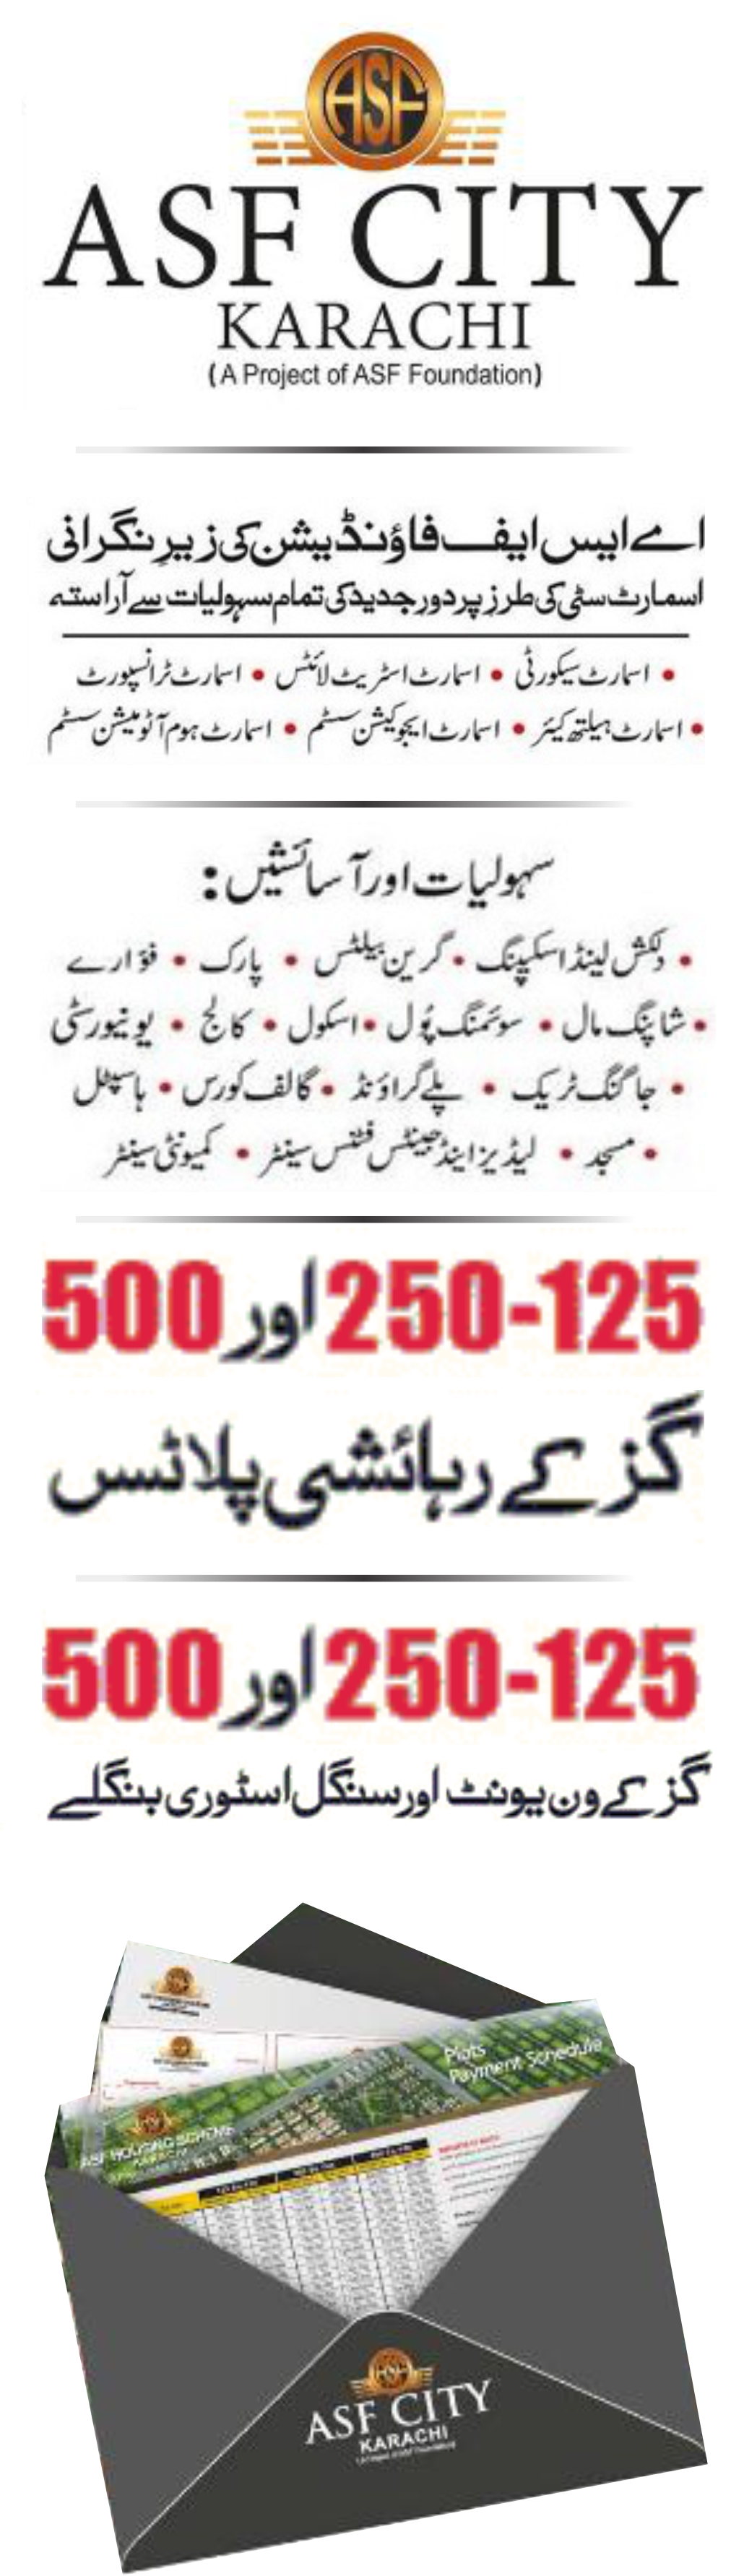 ASF City Karachi Booking